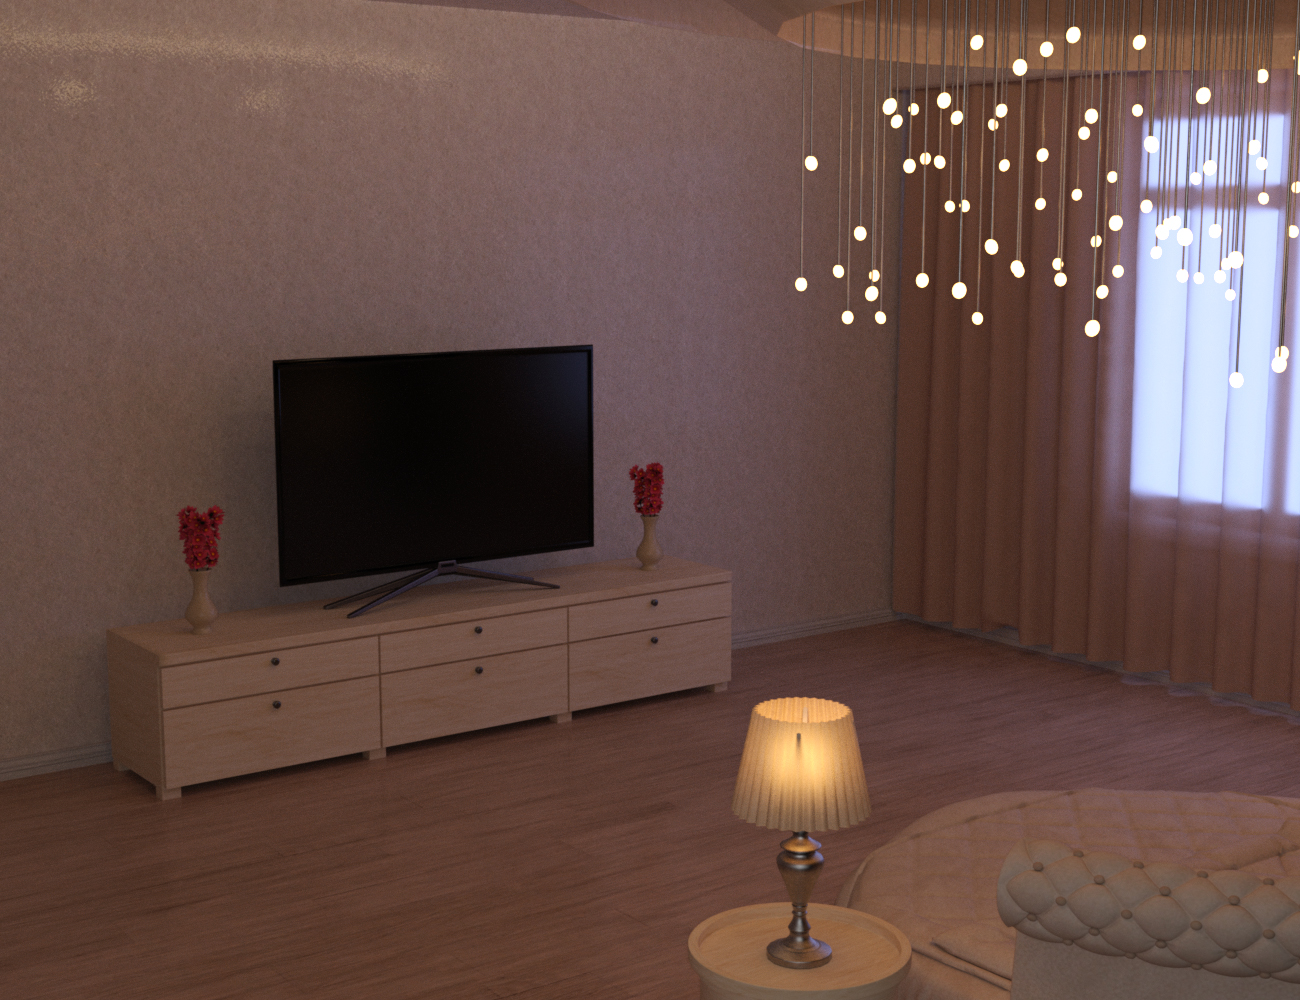 Lavish Bedroom by: Charlie, 3D Models by Daz 3D